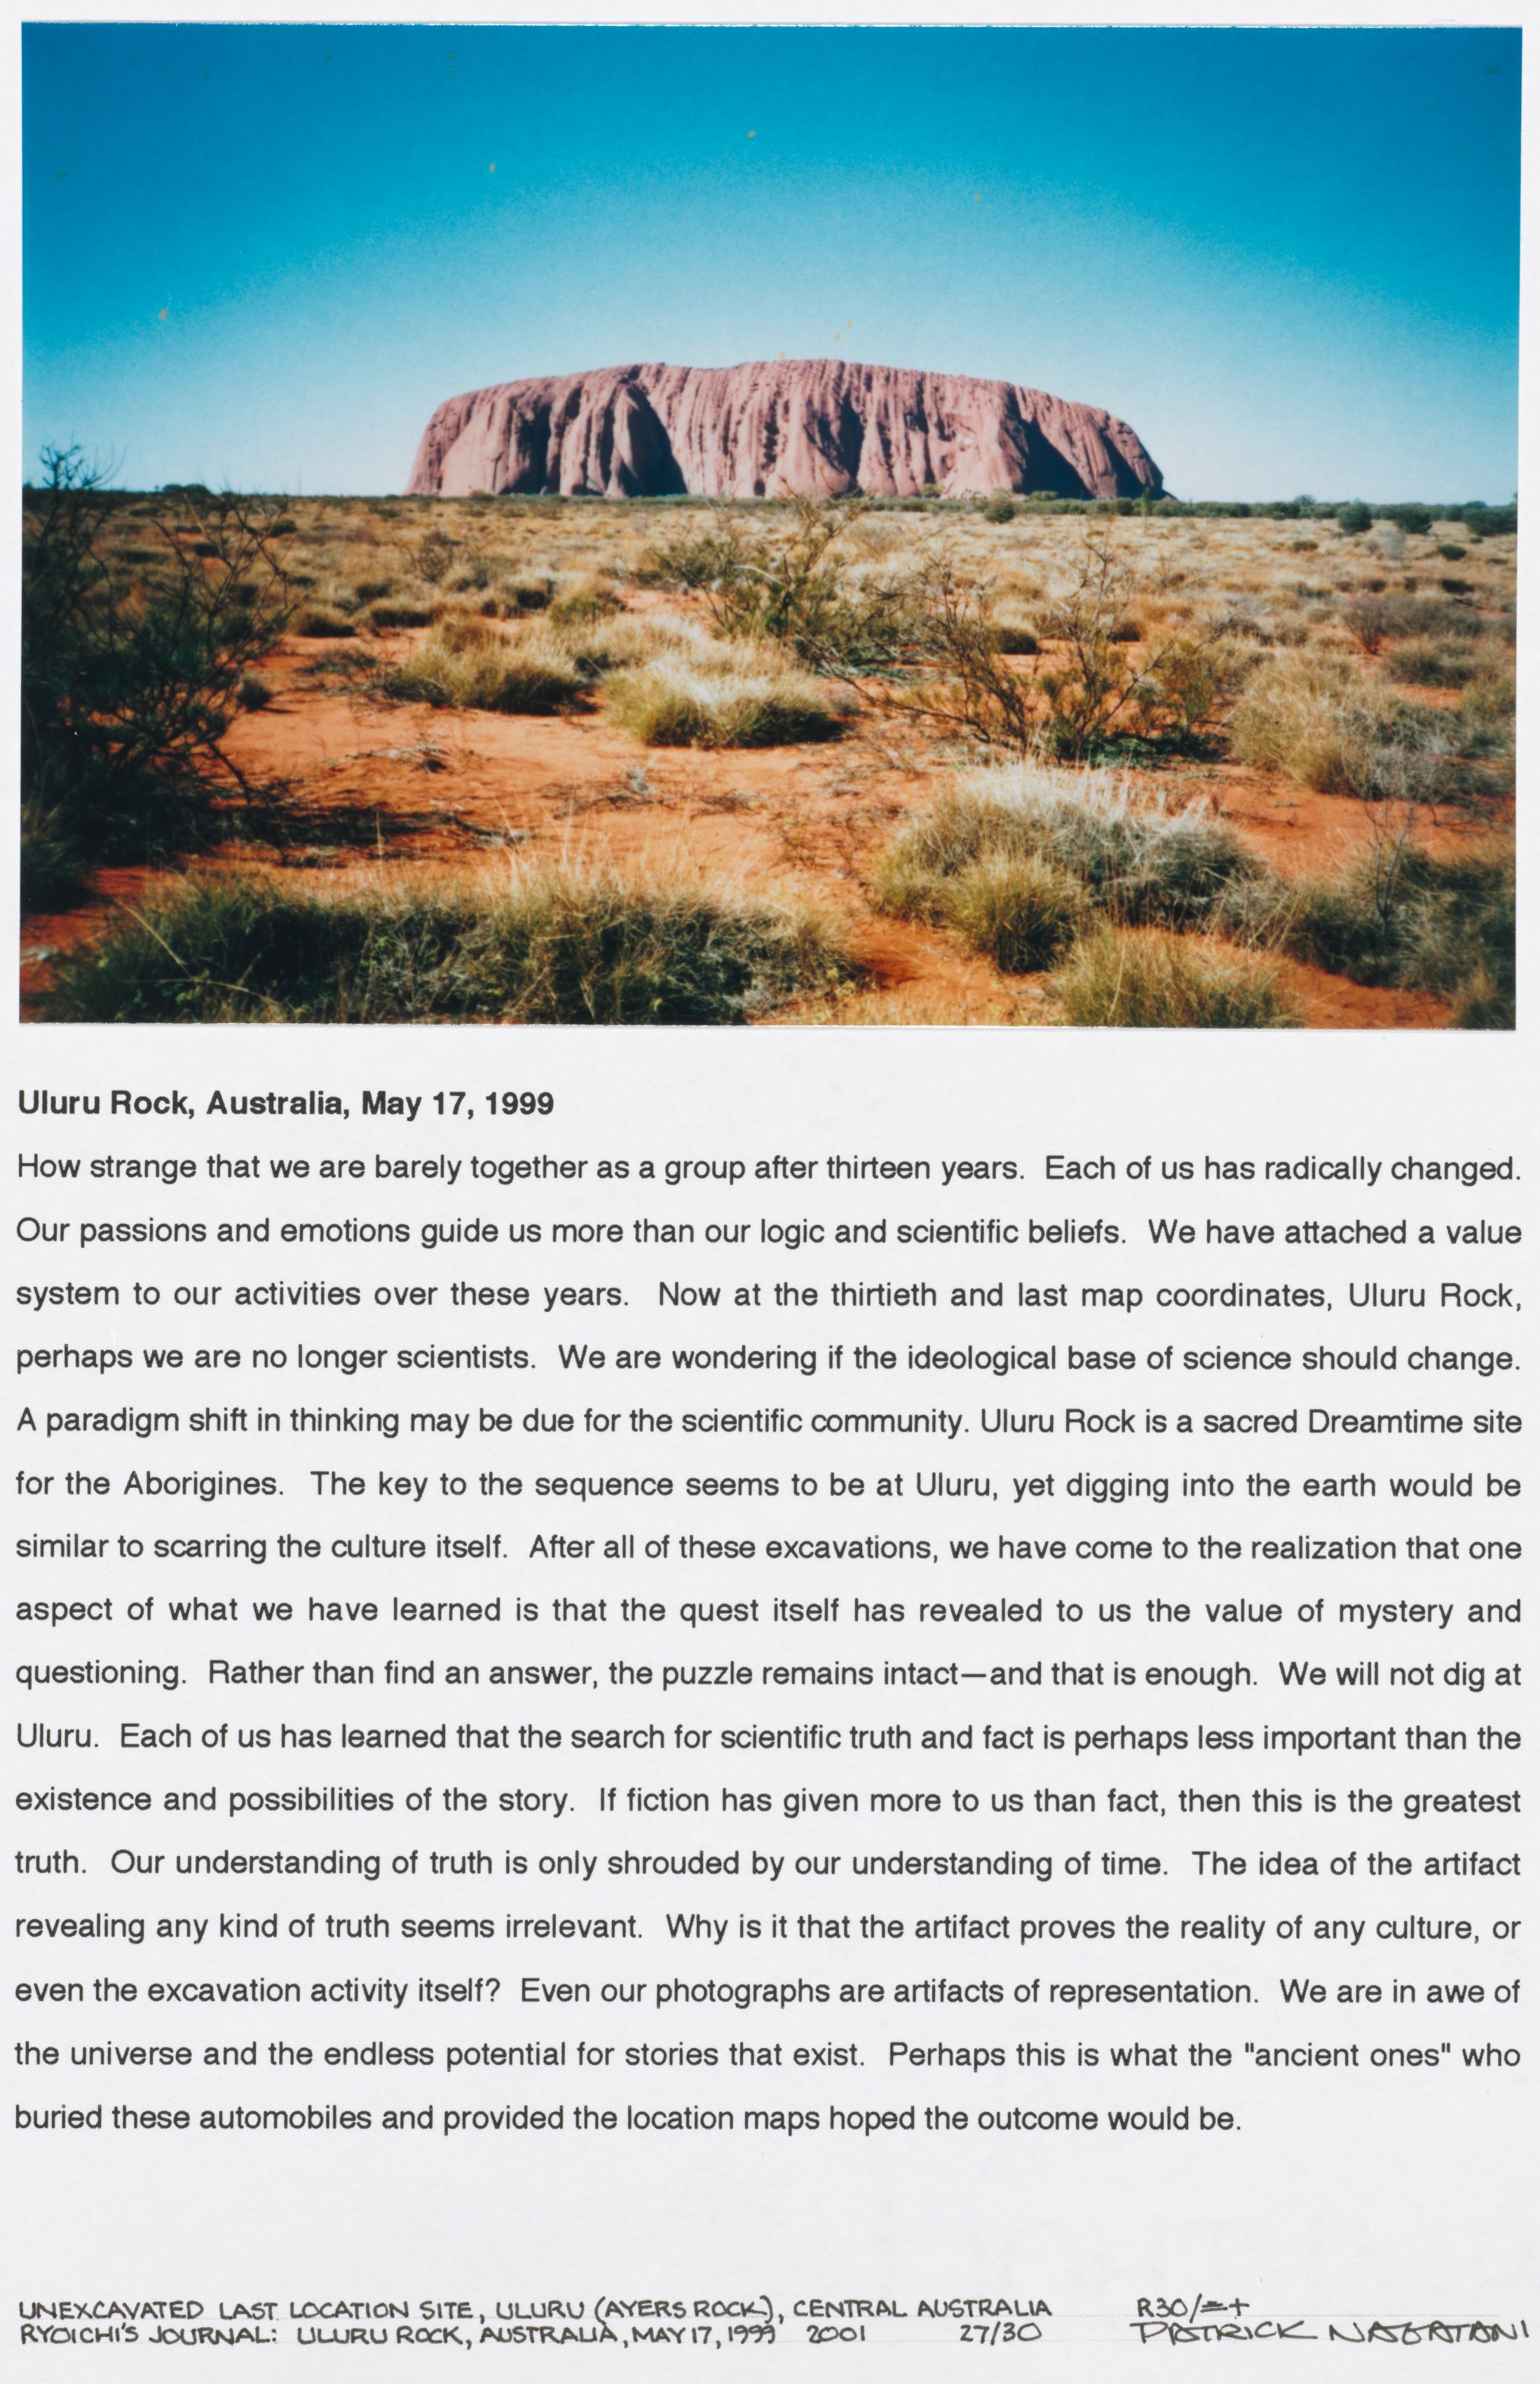 Unexcavated Last Location Site, Uluru (Ayers Rock), Central Australia - Journal Text (R30)
